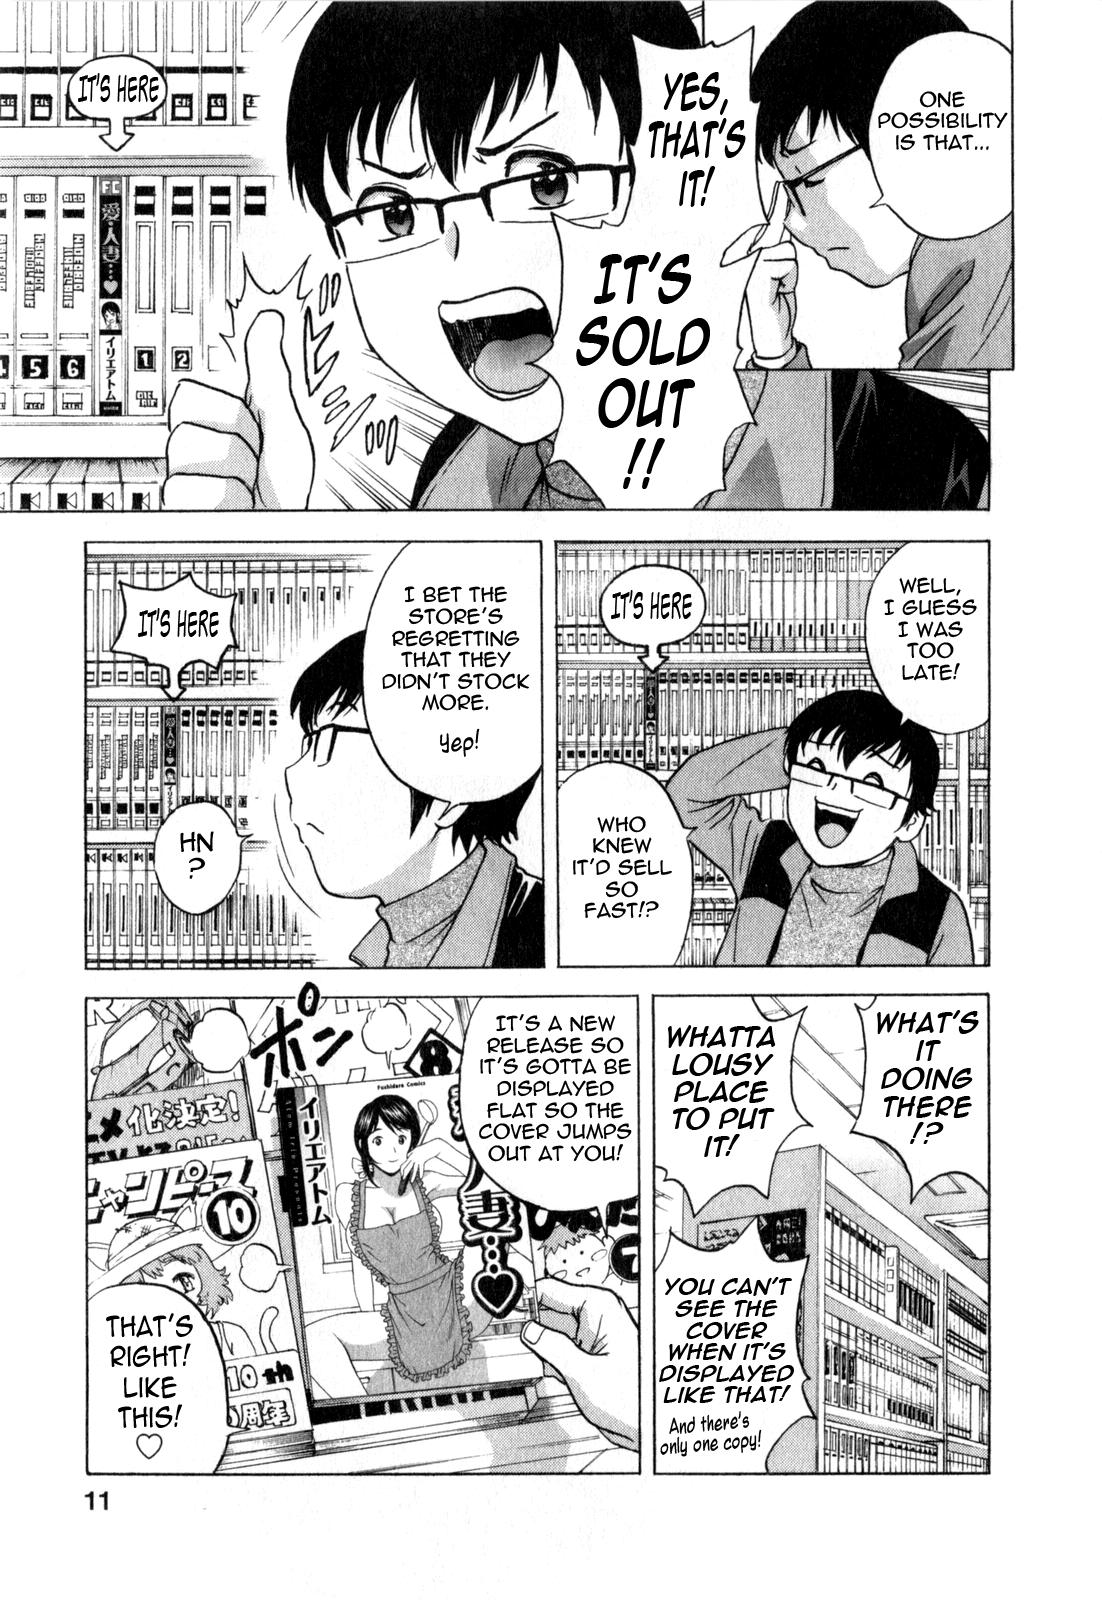 Life with Married Women Just Like a Manga 3 12